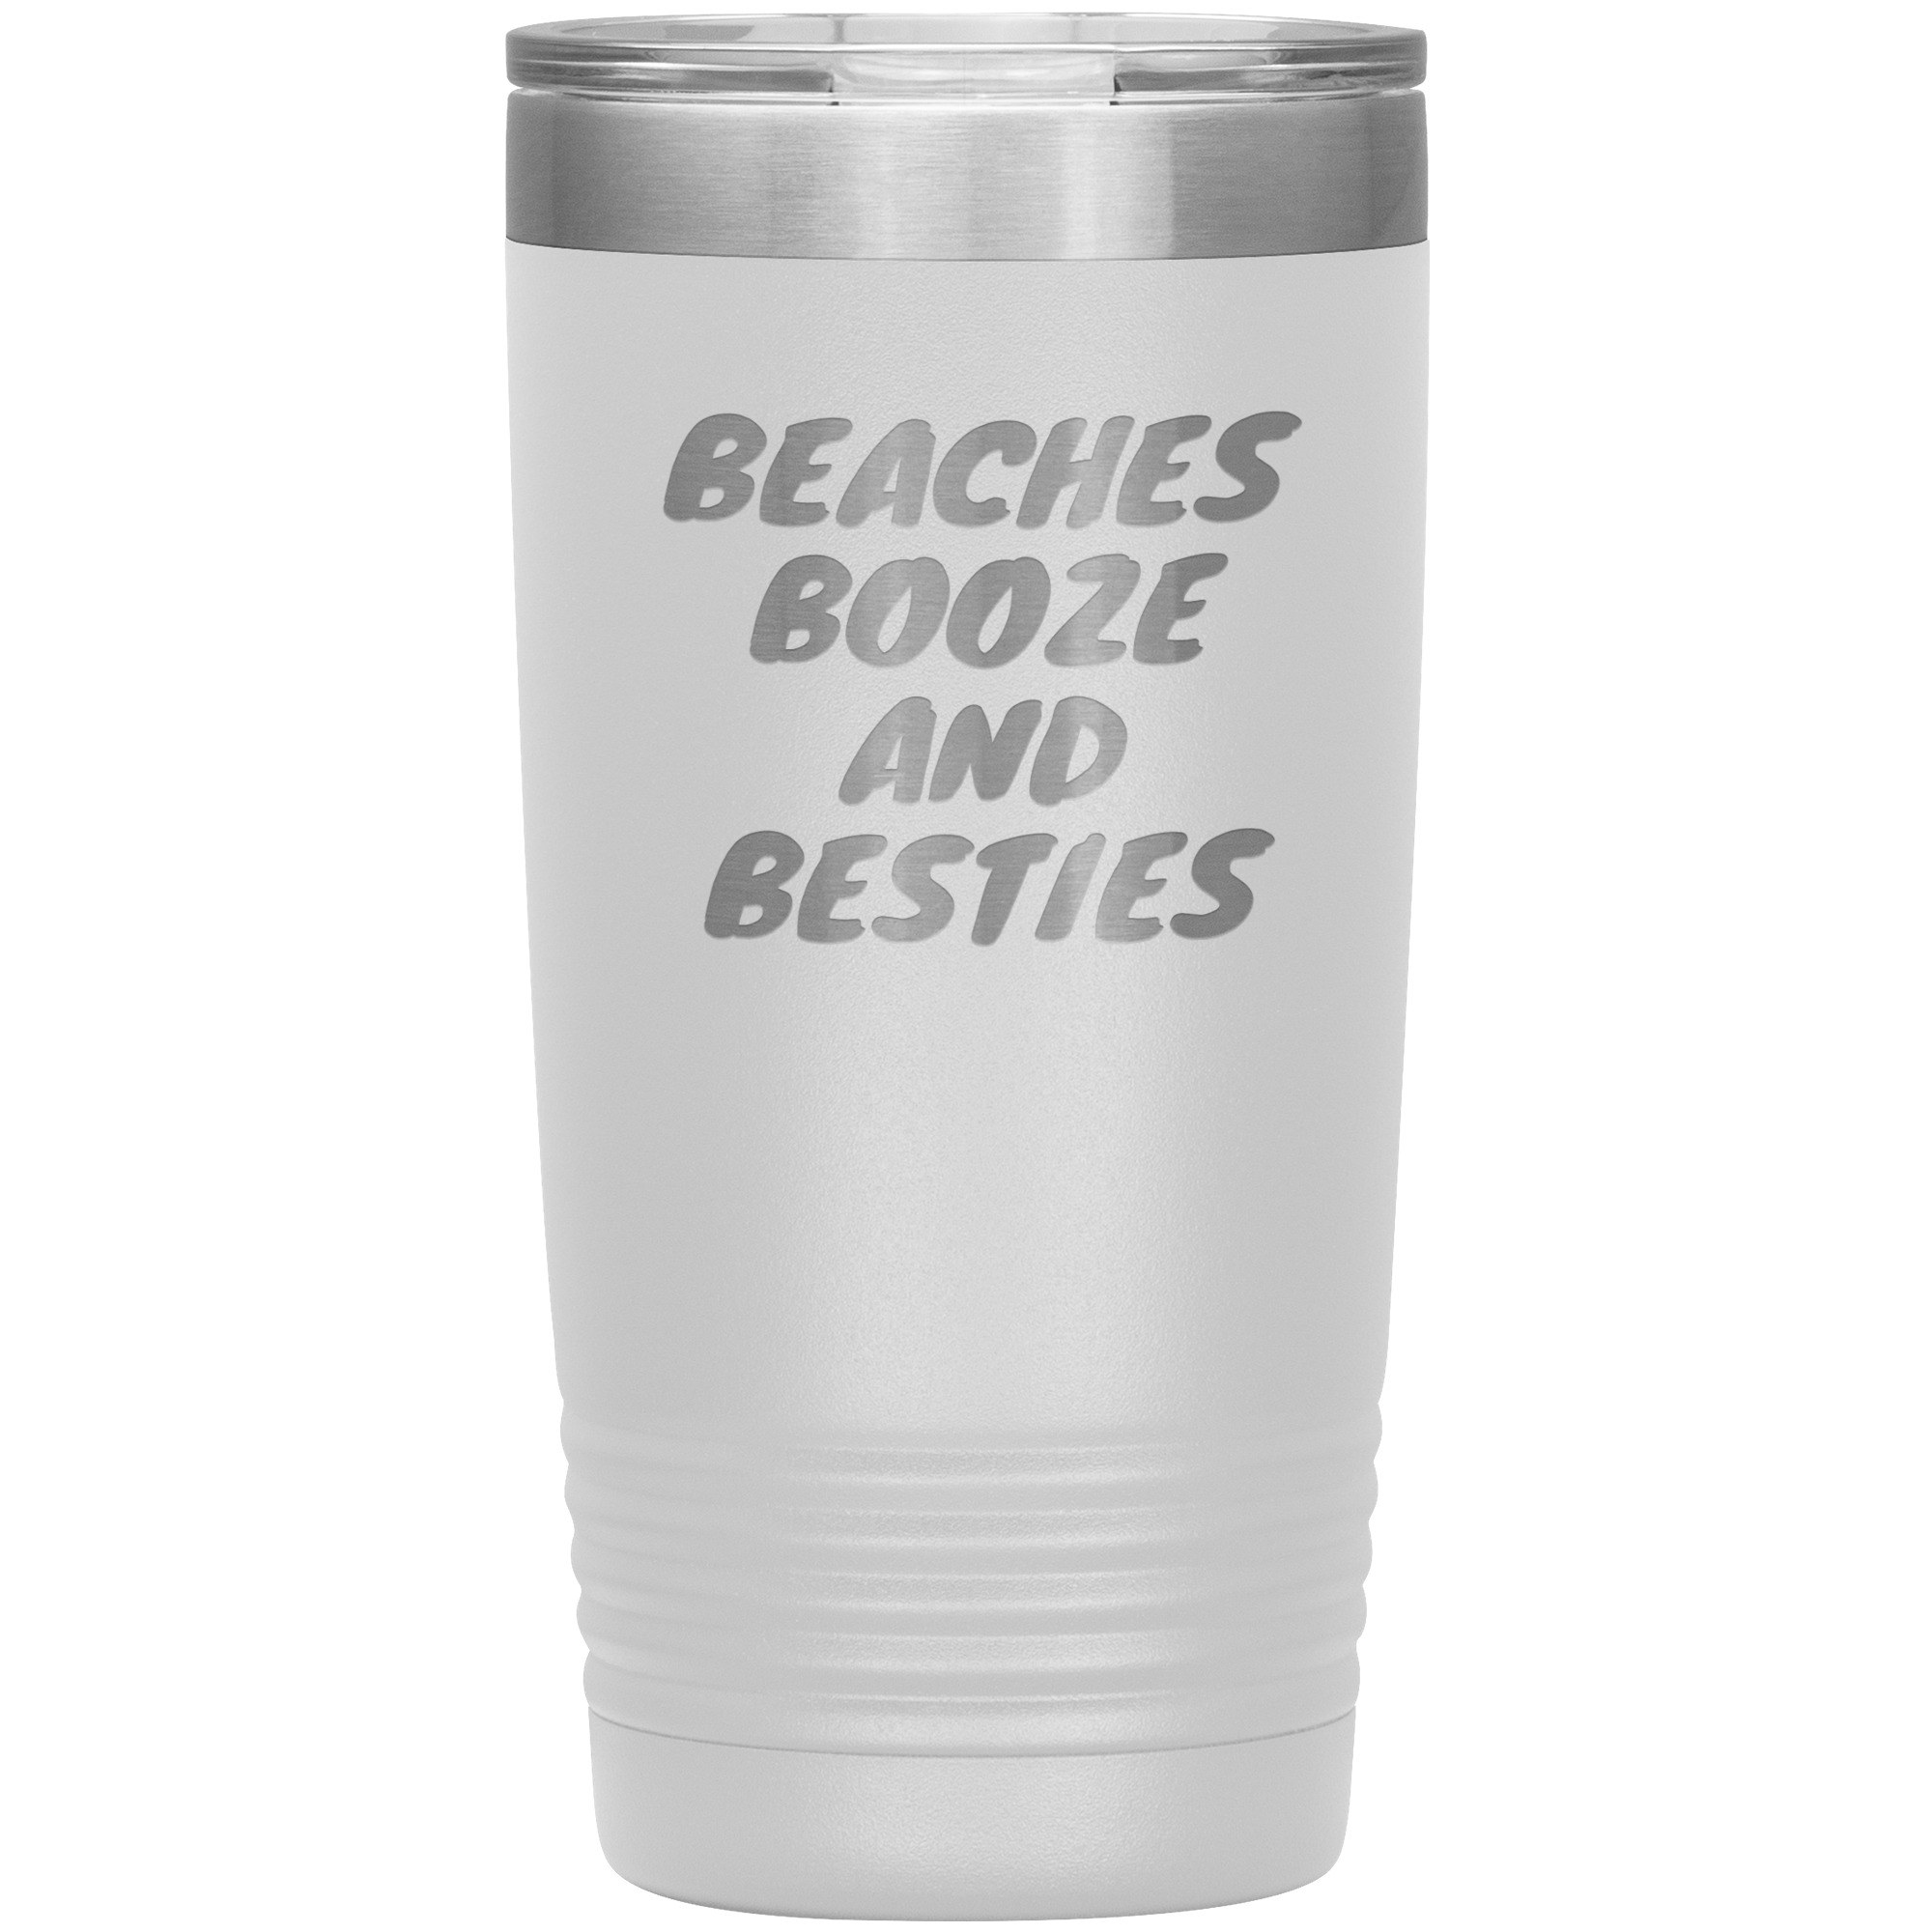 "Beaches Booze And Besties" Tumbler